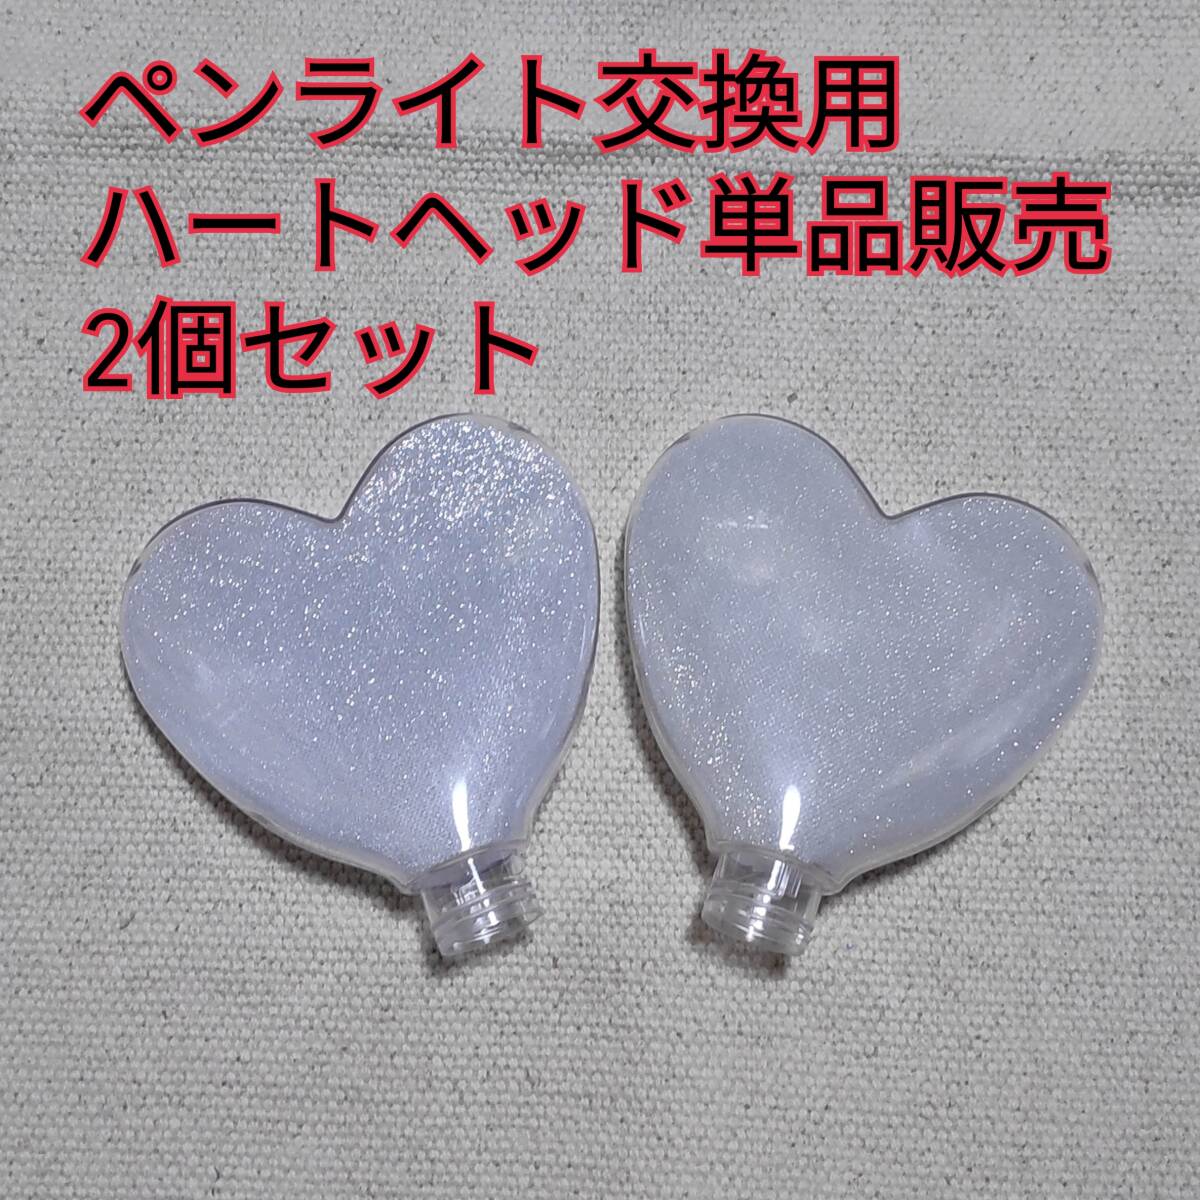 * Heart -Type Penlight Head 2 штуки продаж Concert Concert Light Compatible